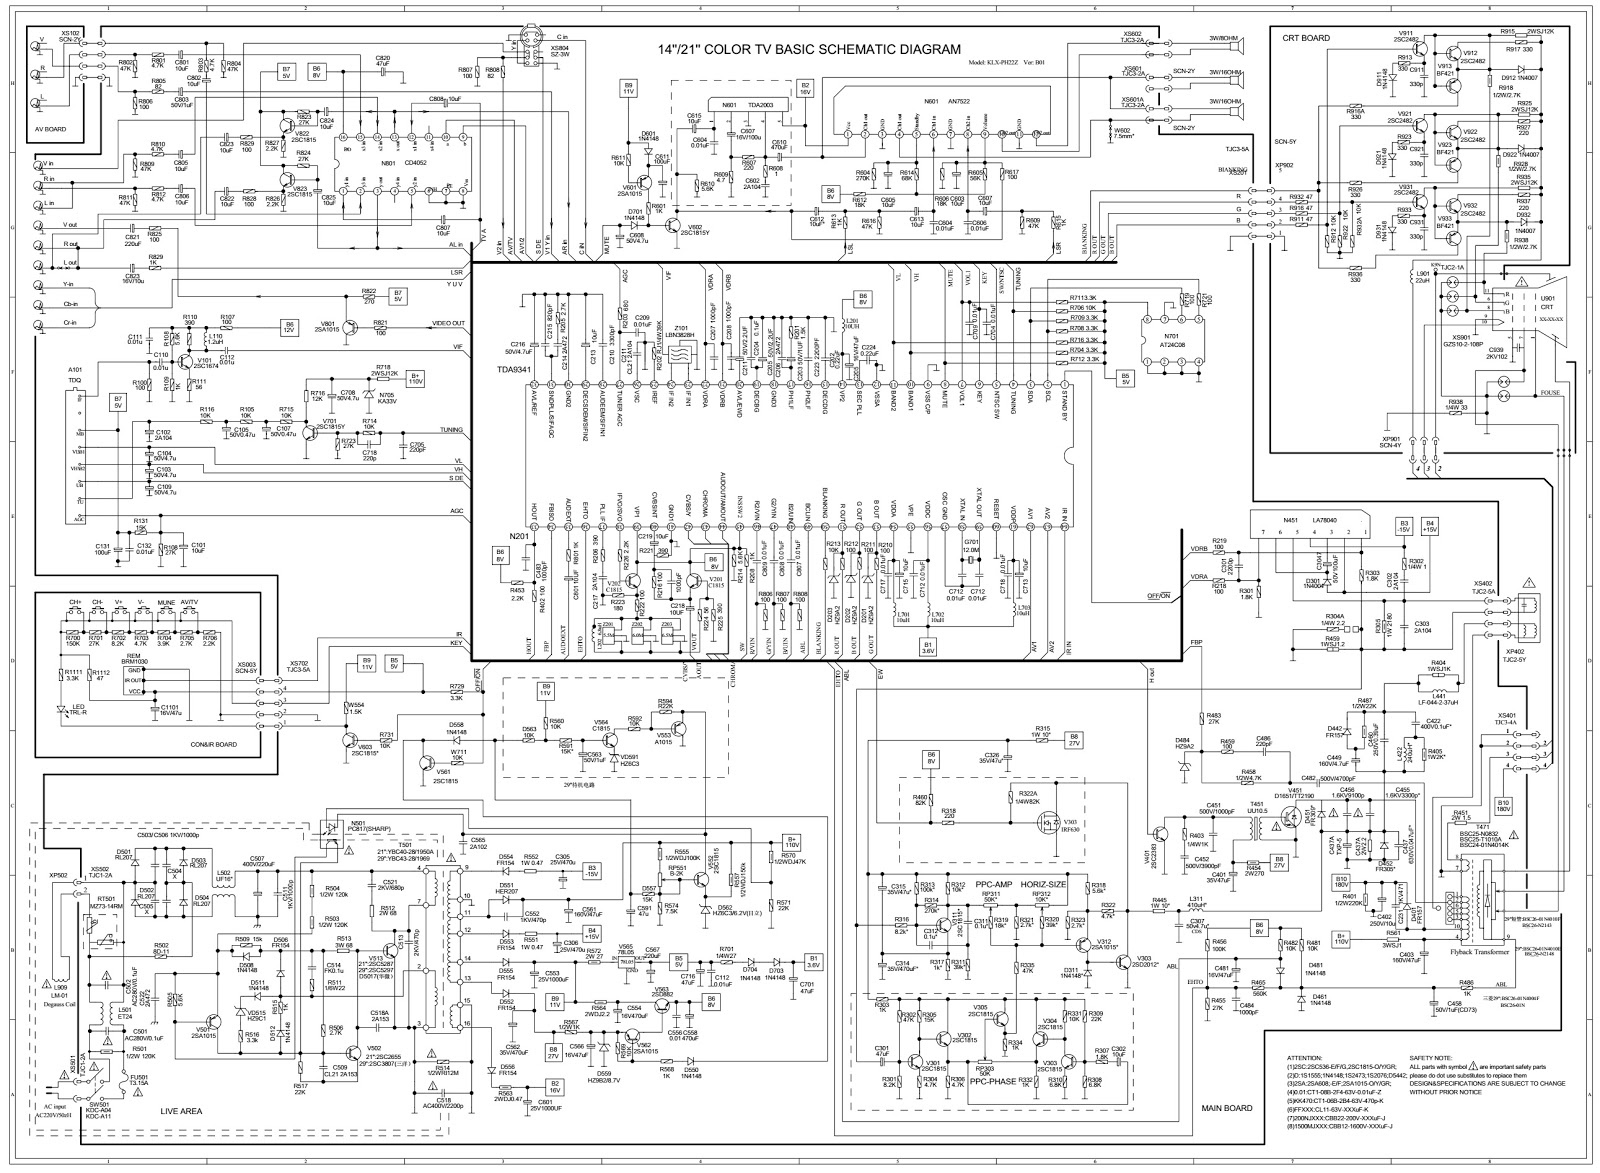 [DIAGRAM] Sansui Color Tv Circuit Diagram - MYDIAGRAM.ONLINE